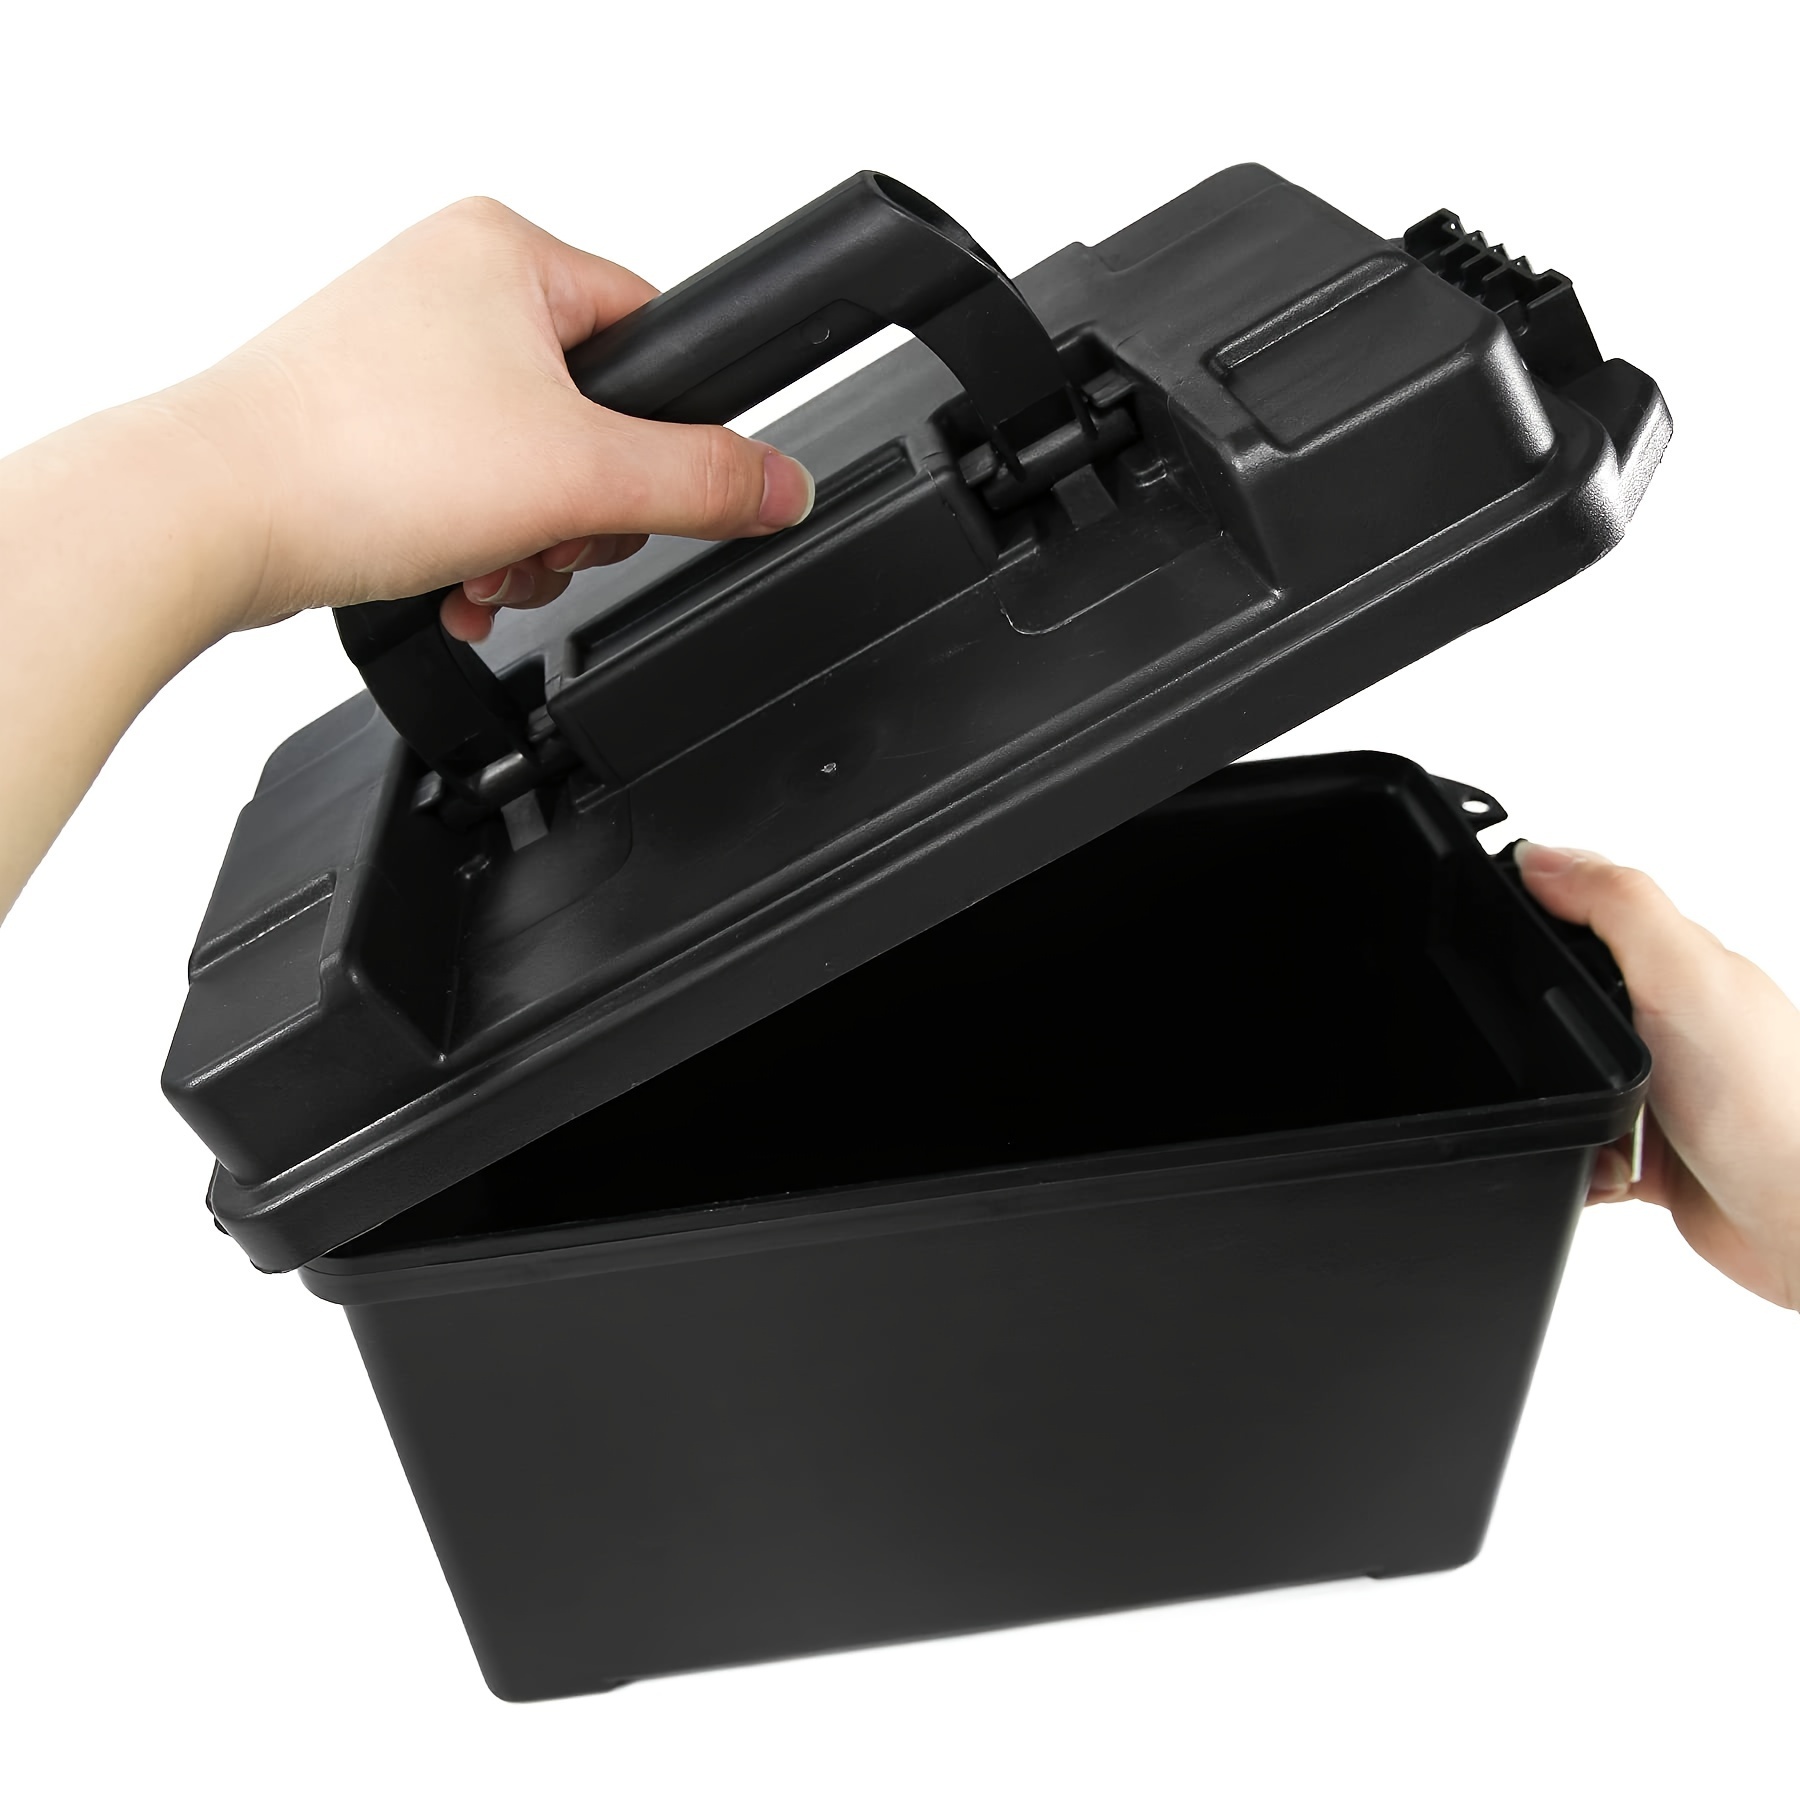 Portable Tool Storage Box - Small Parts Organizer with 4 Multi